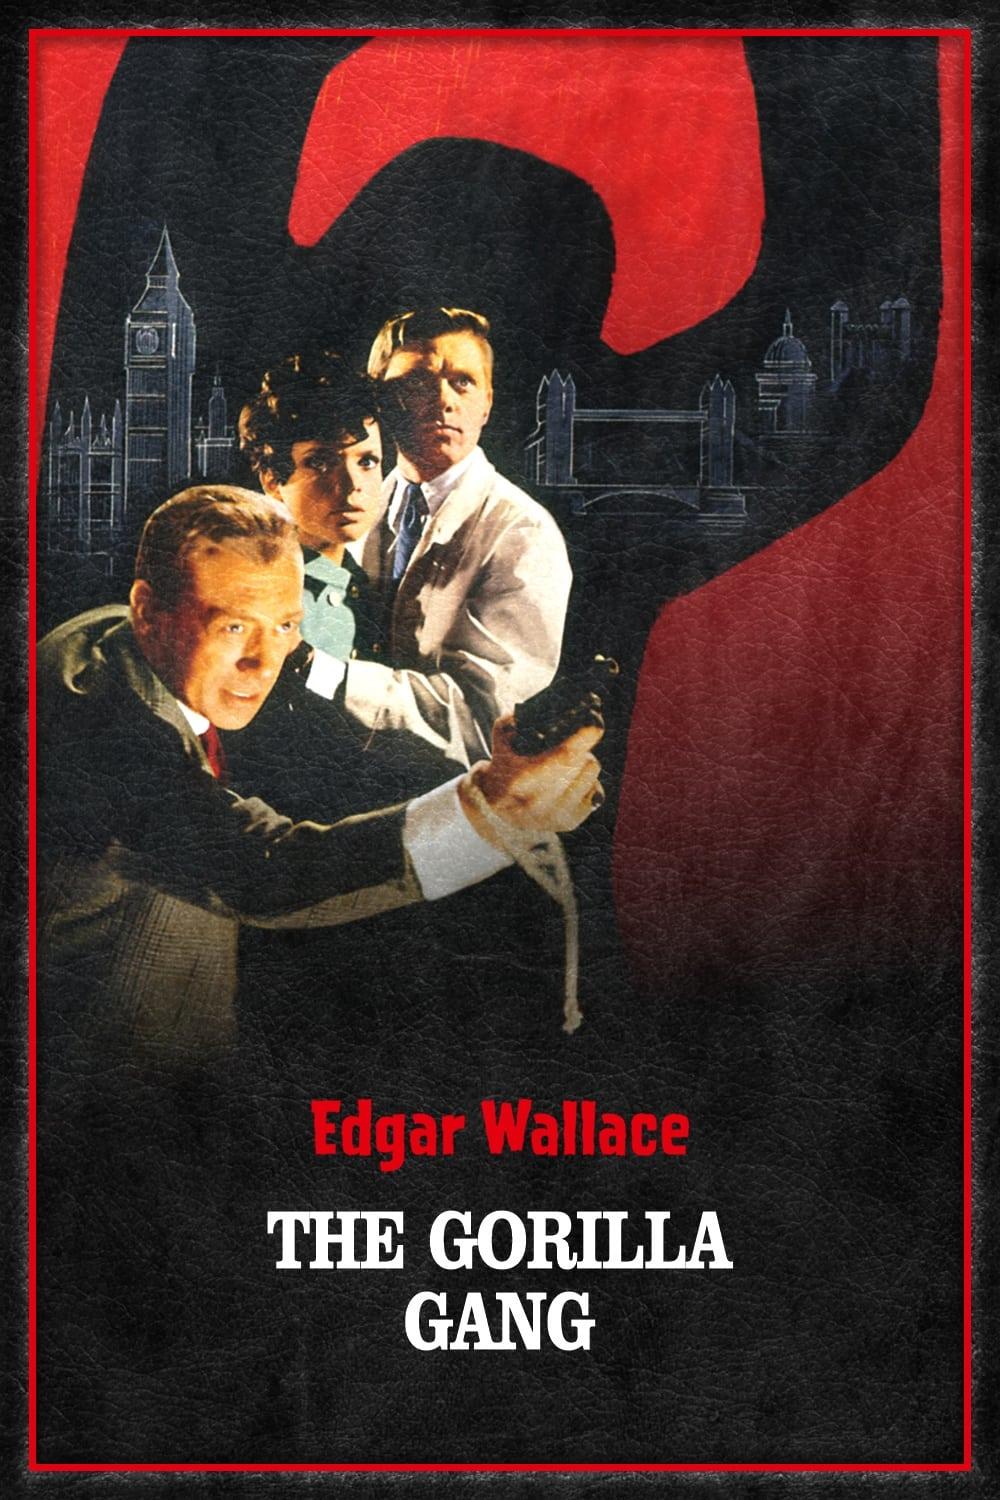 Gorilla Gang poster